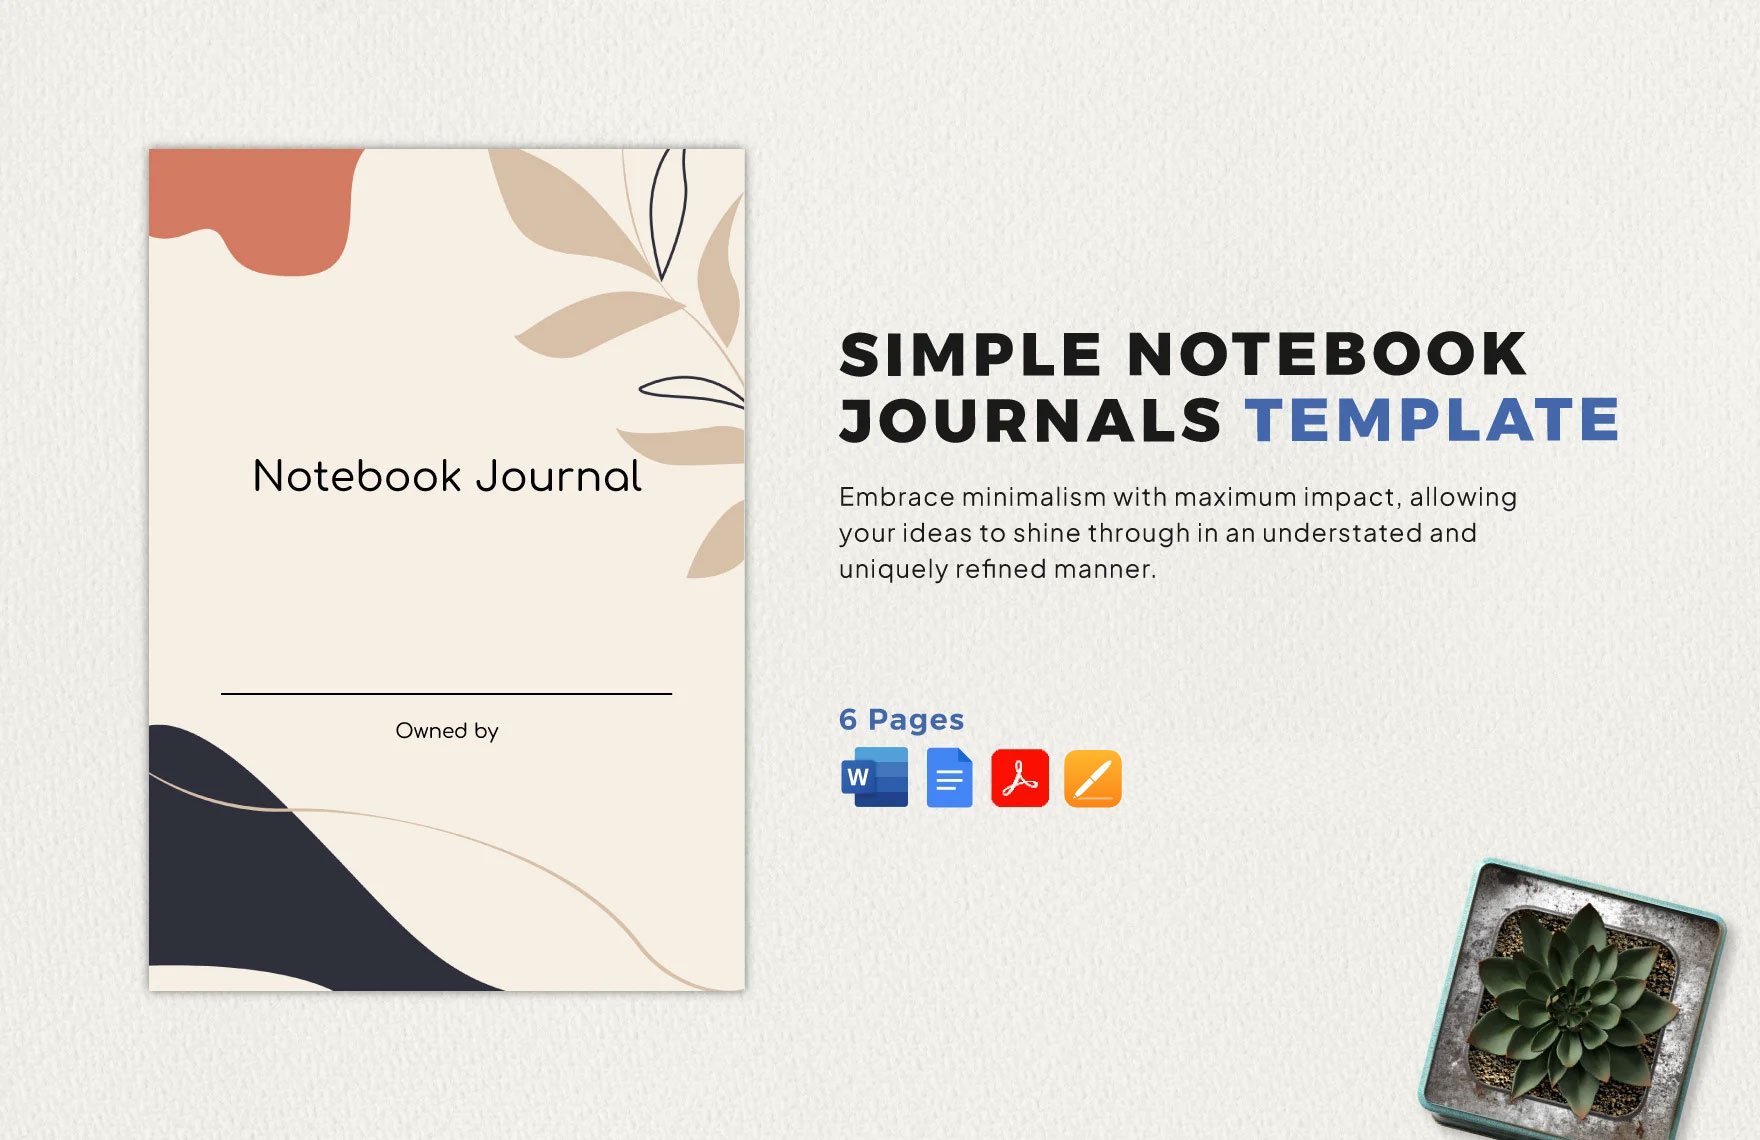 Simple Notebook Journals Template